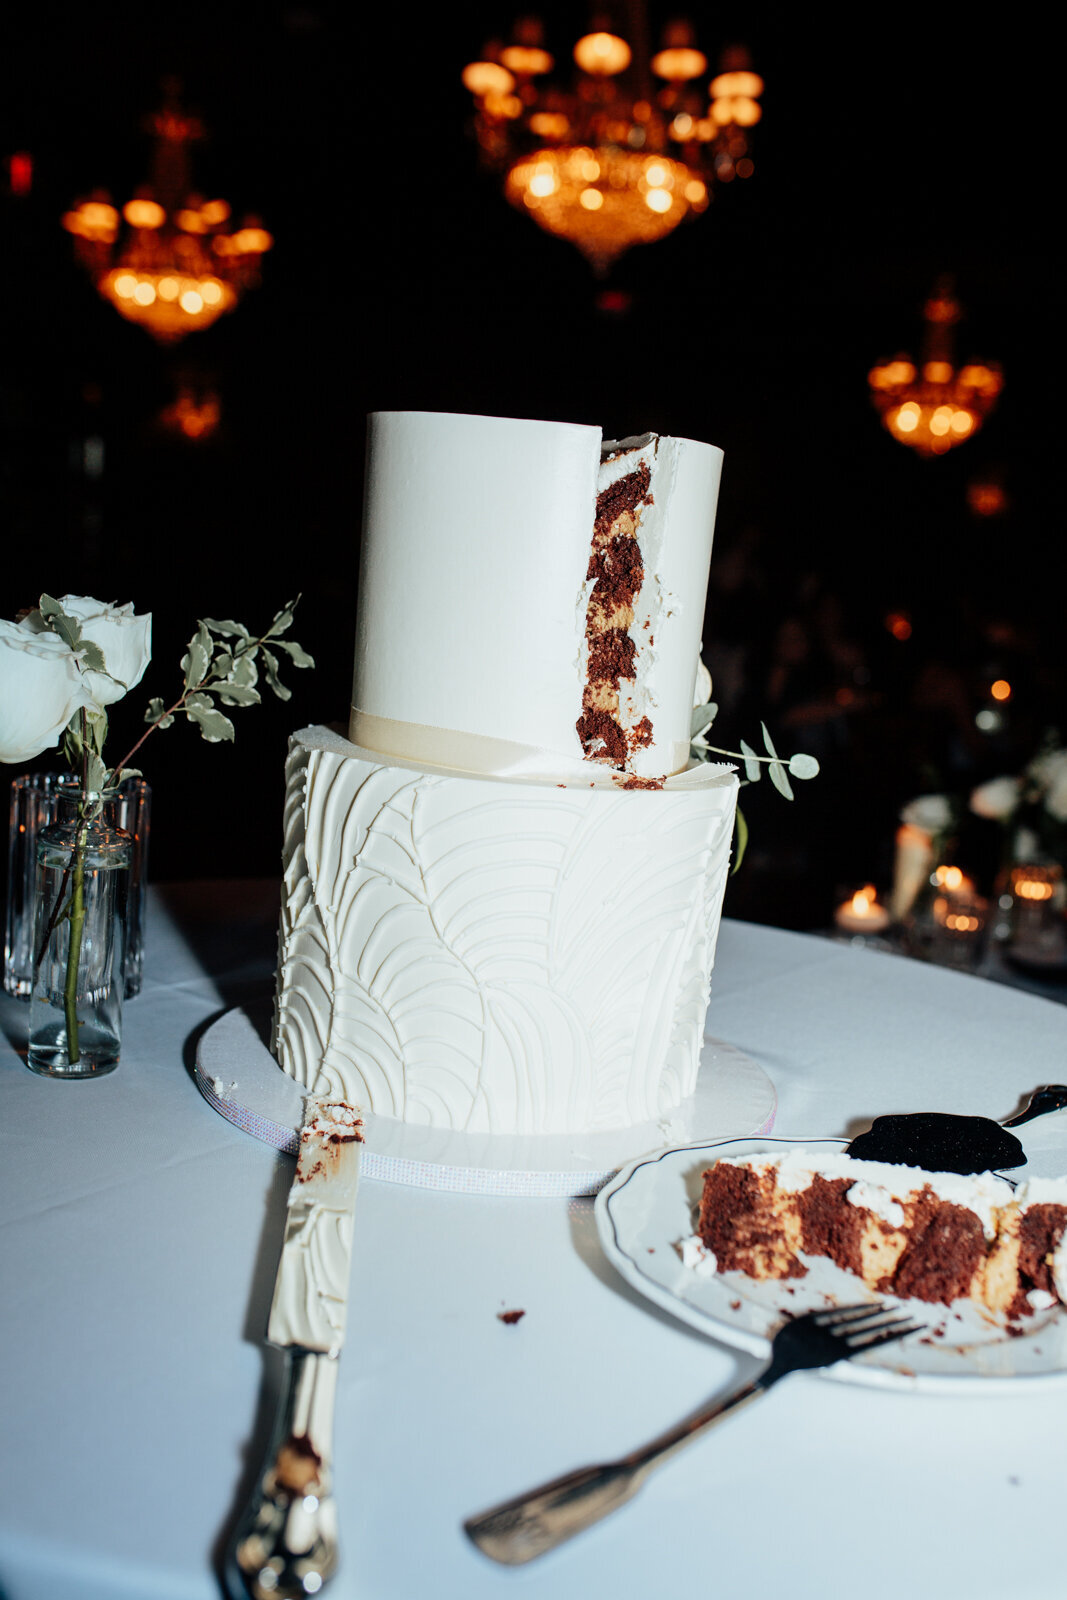 Cake details at wedding reception at Cleaver